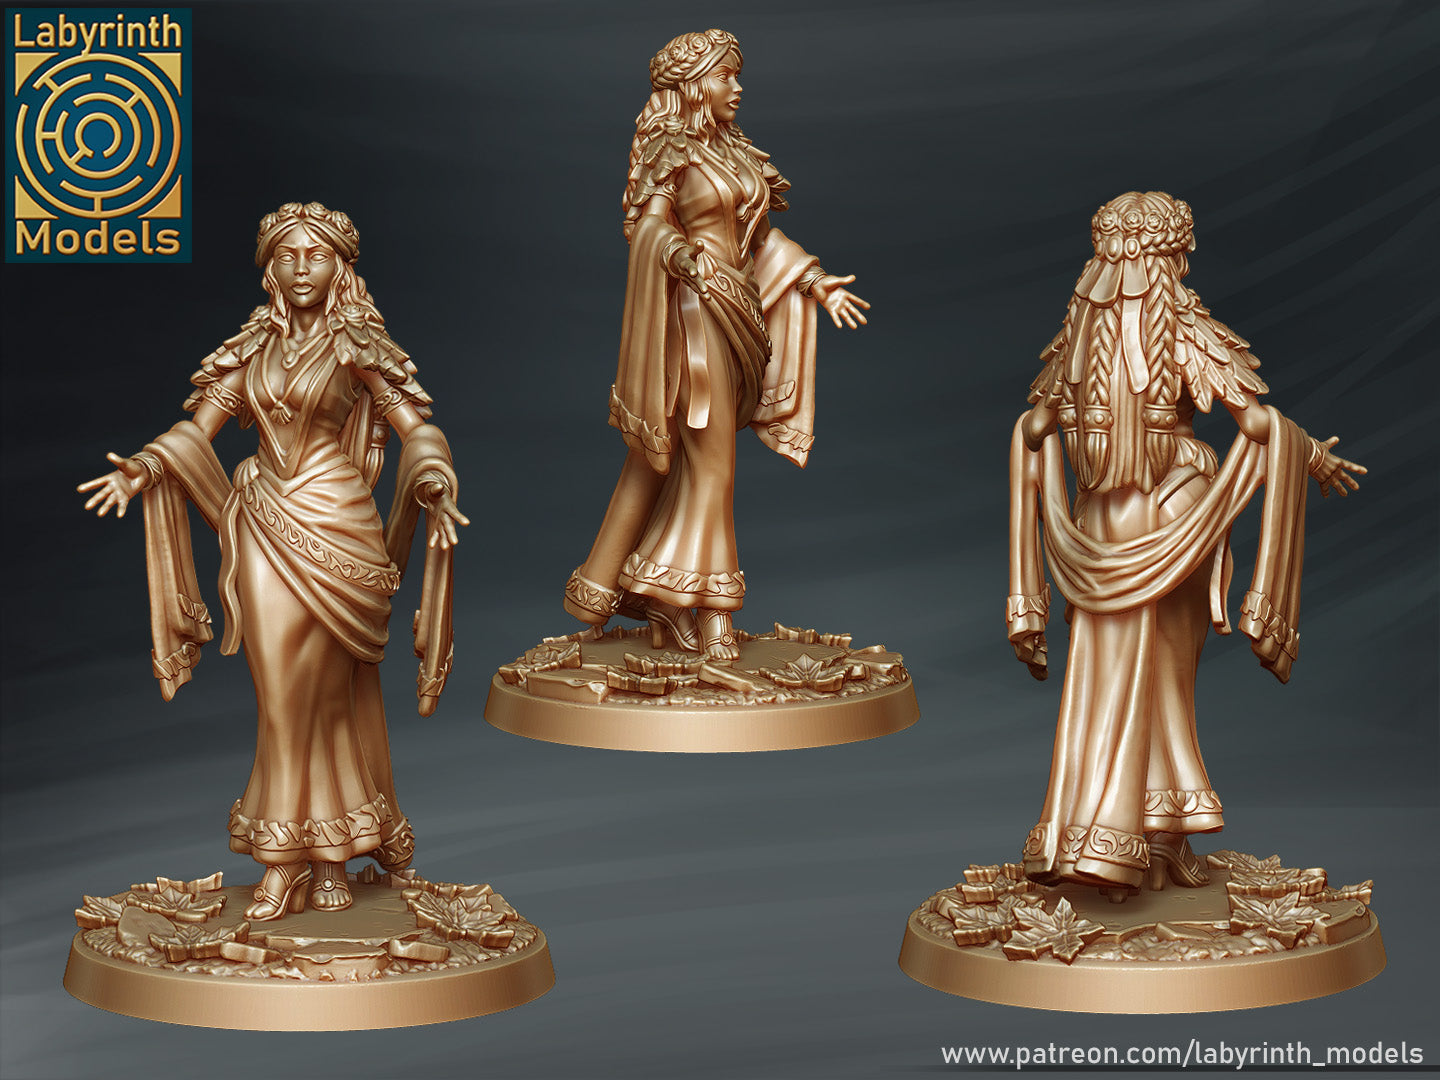 Moirai Priestesses by Labyrinth Models